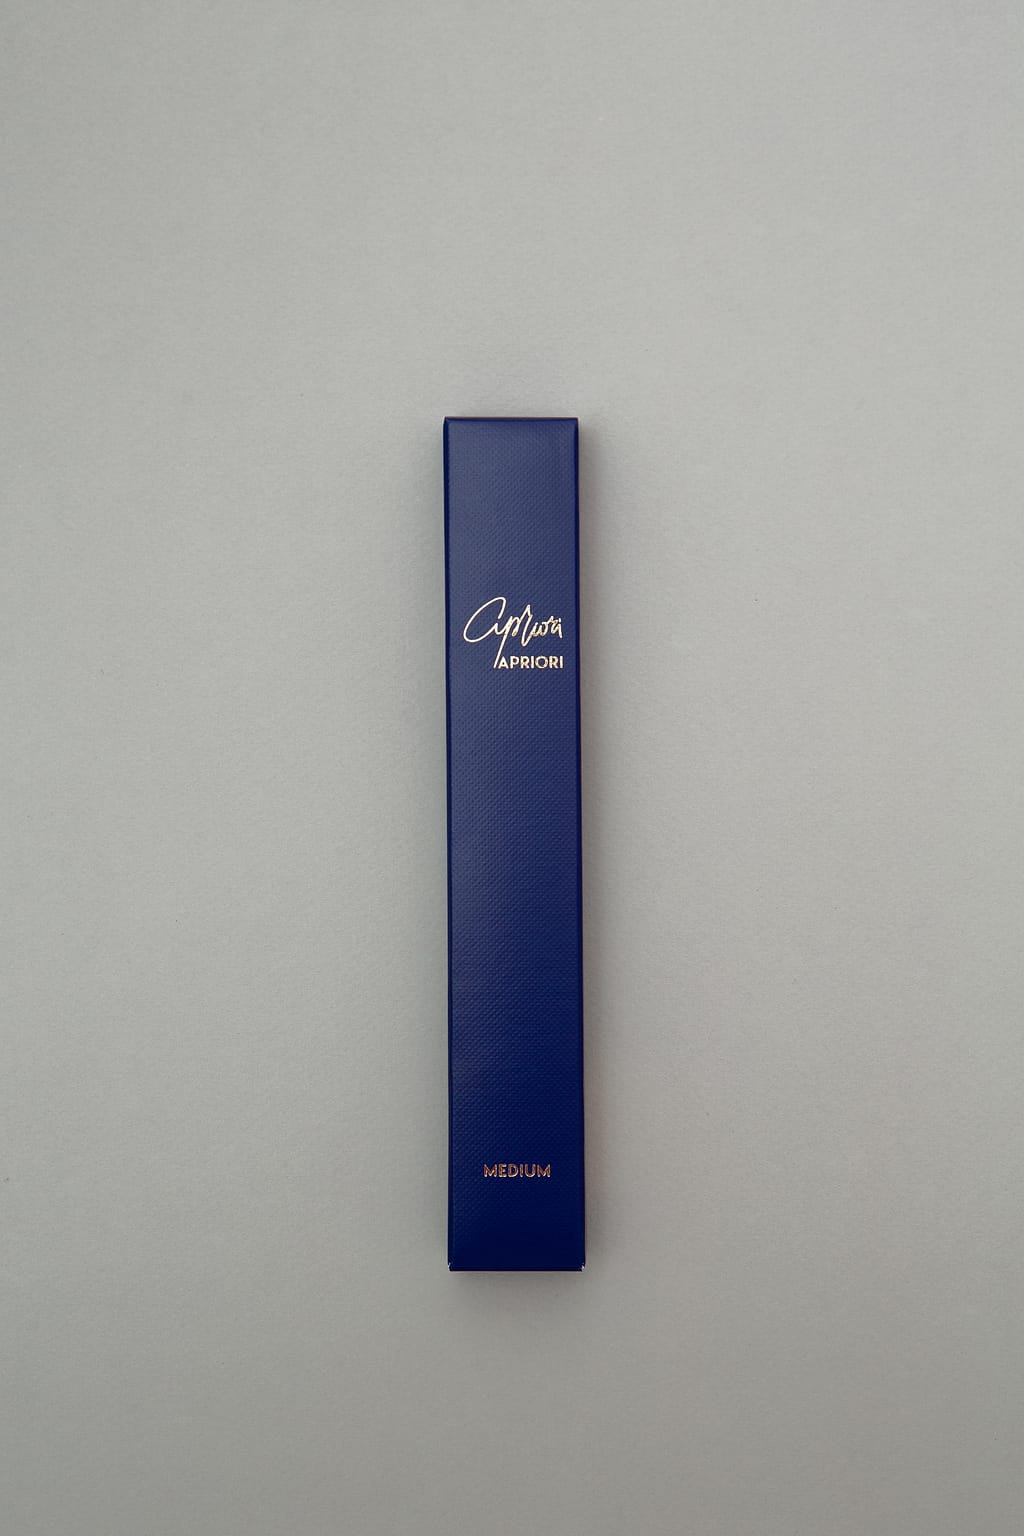 Sapphire Blue Gold designer toothbrush SLIM by Apriori